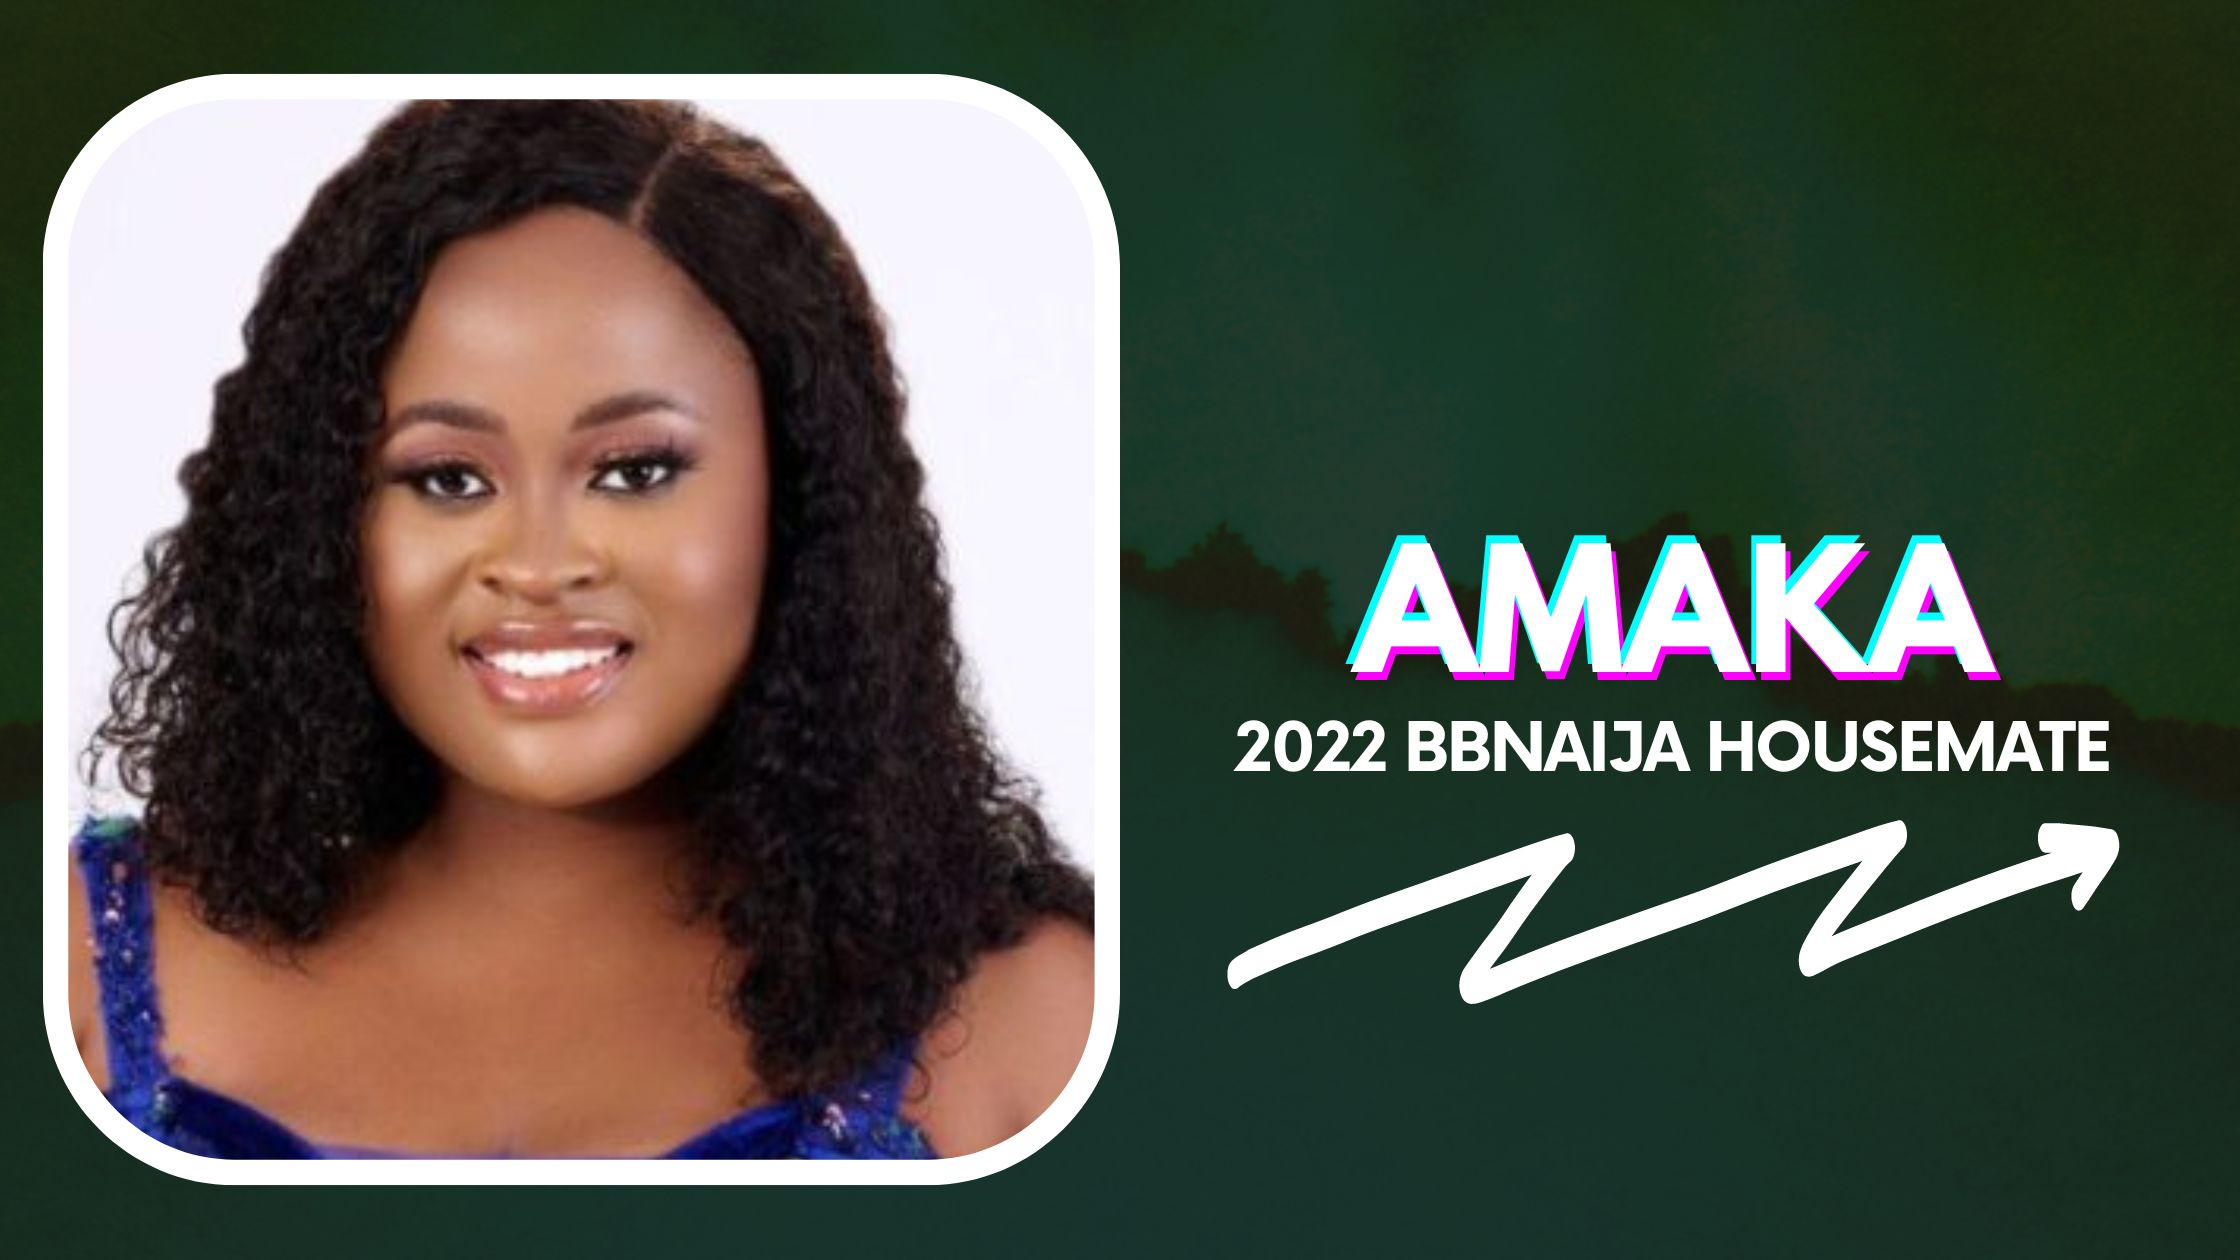 Meet Amaka, 2022 BBNaija Housemate